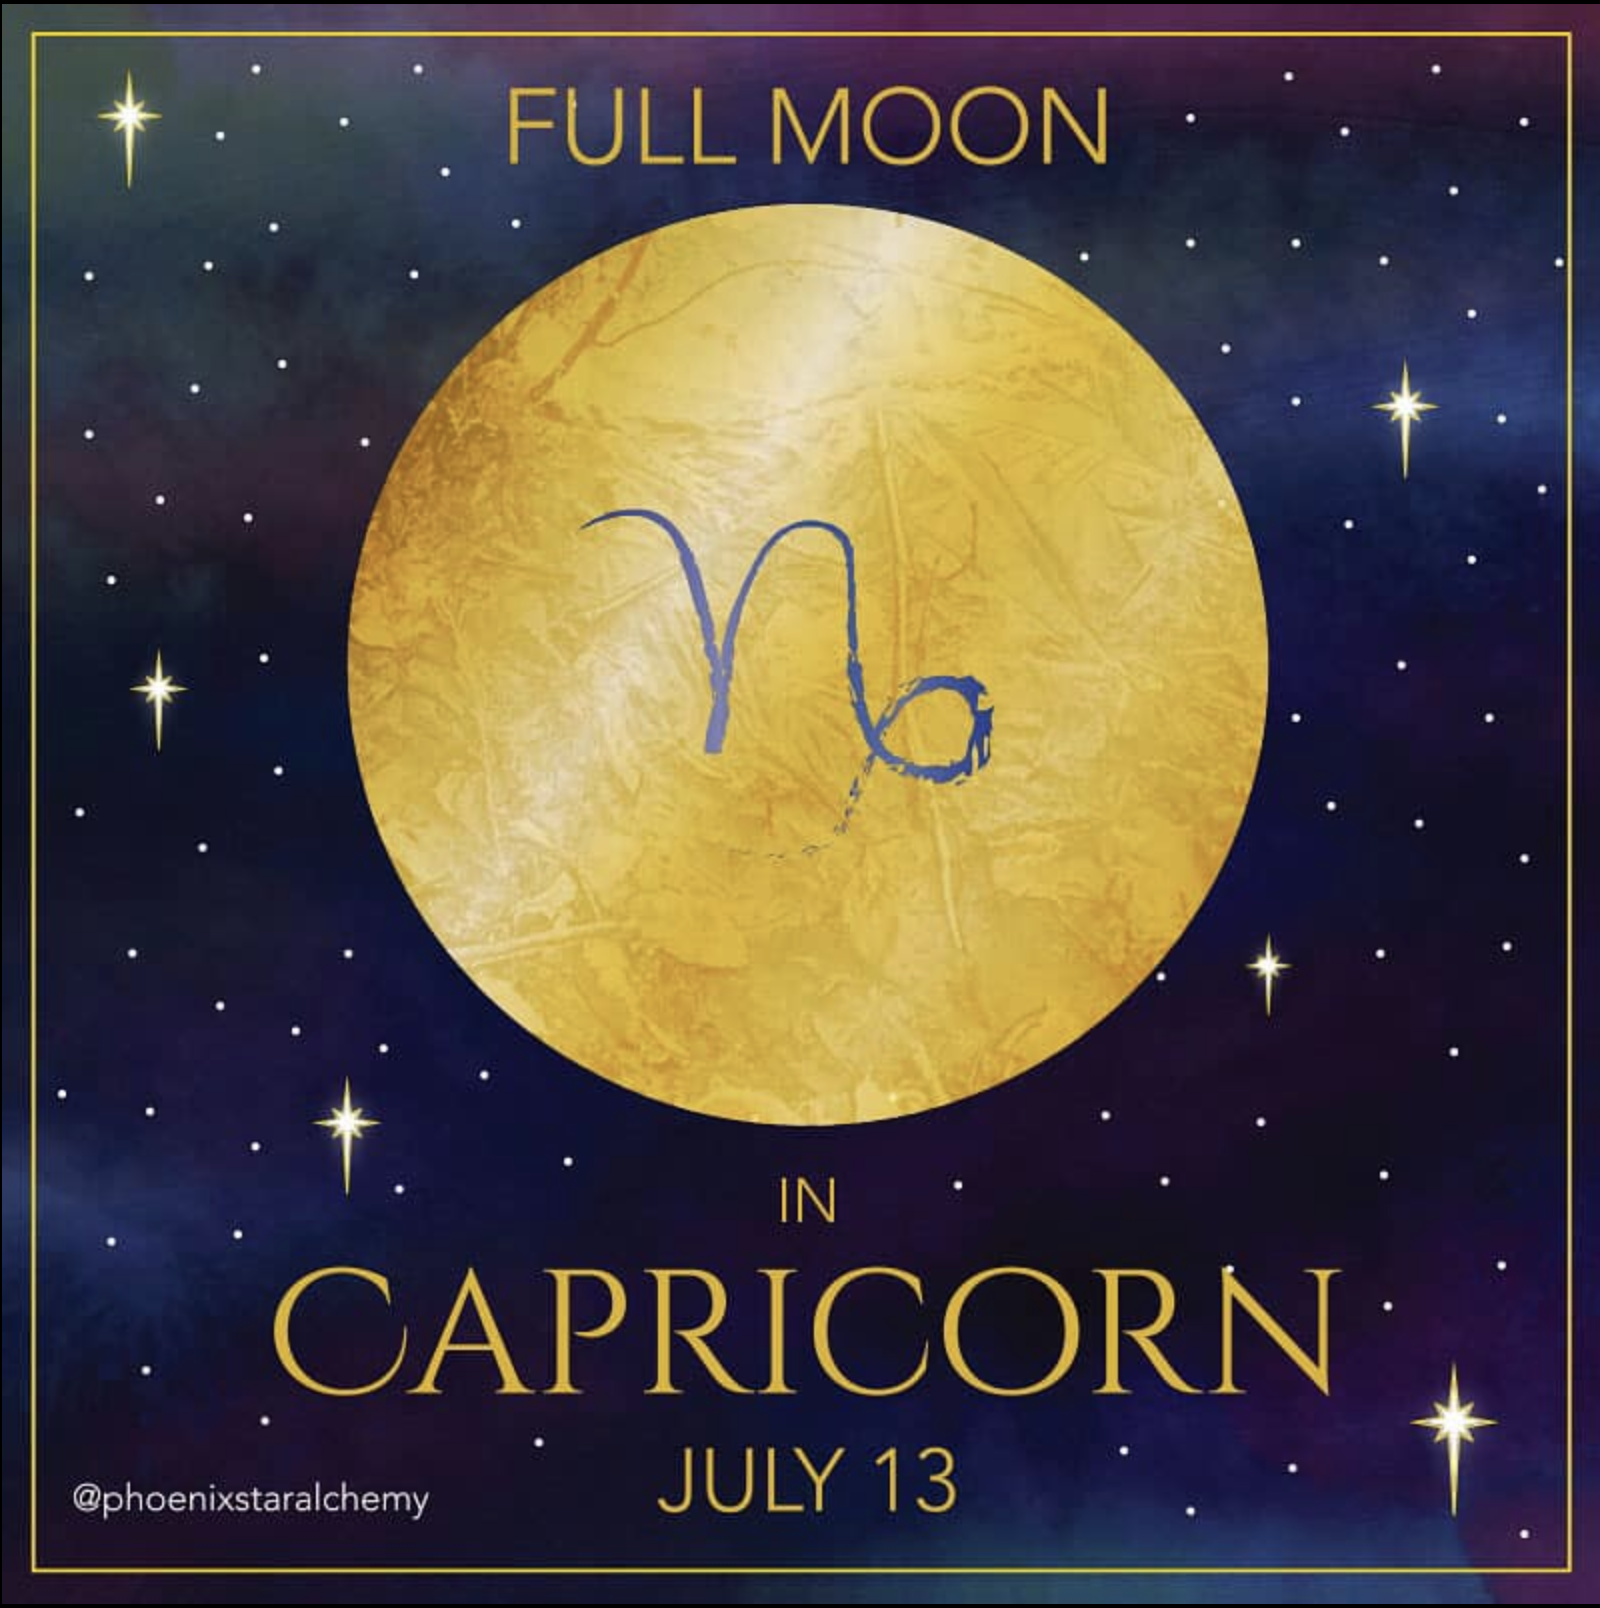 Happy Full Moon in Capricorn 2022!